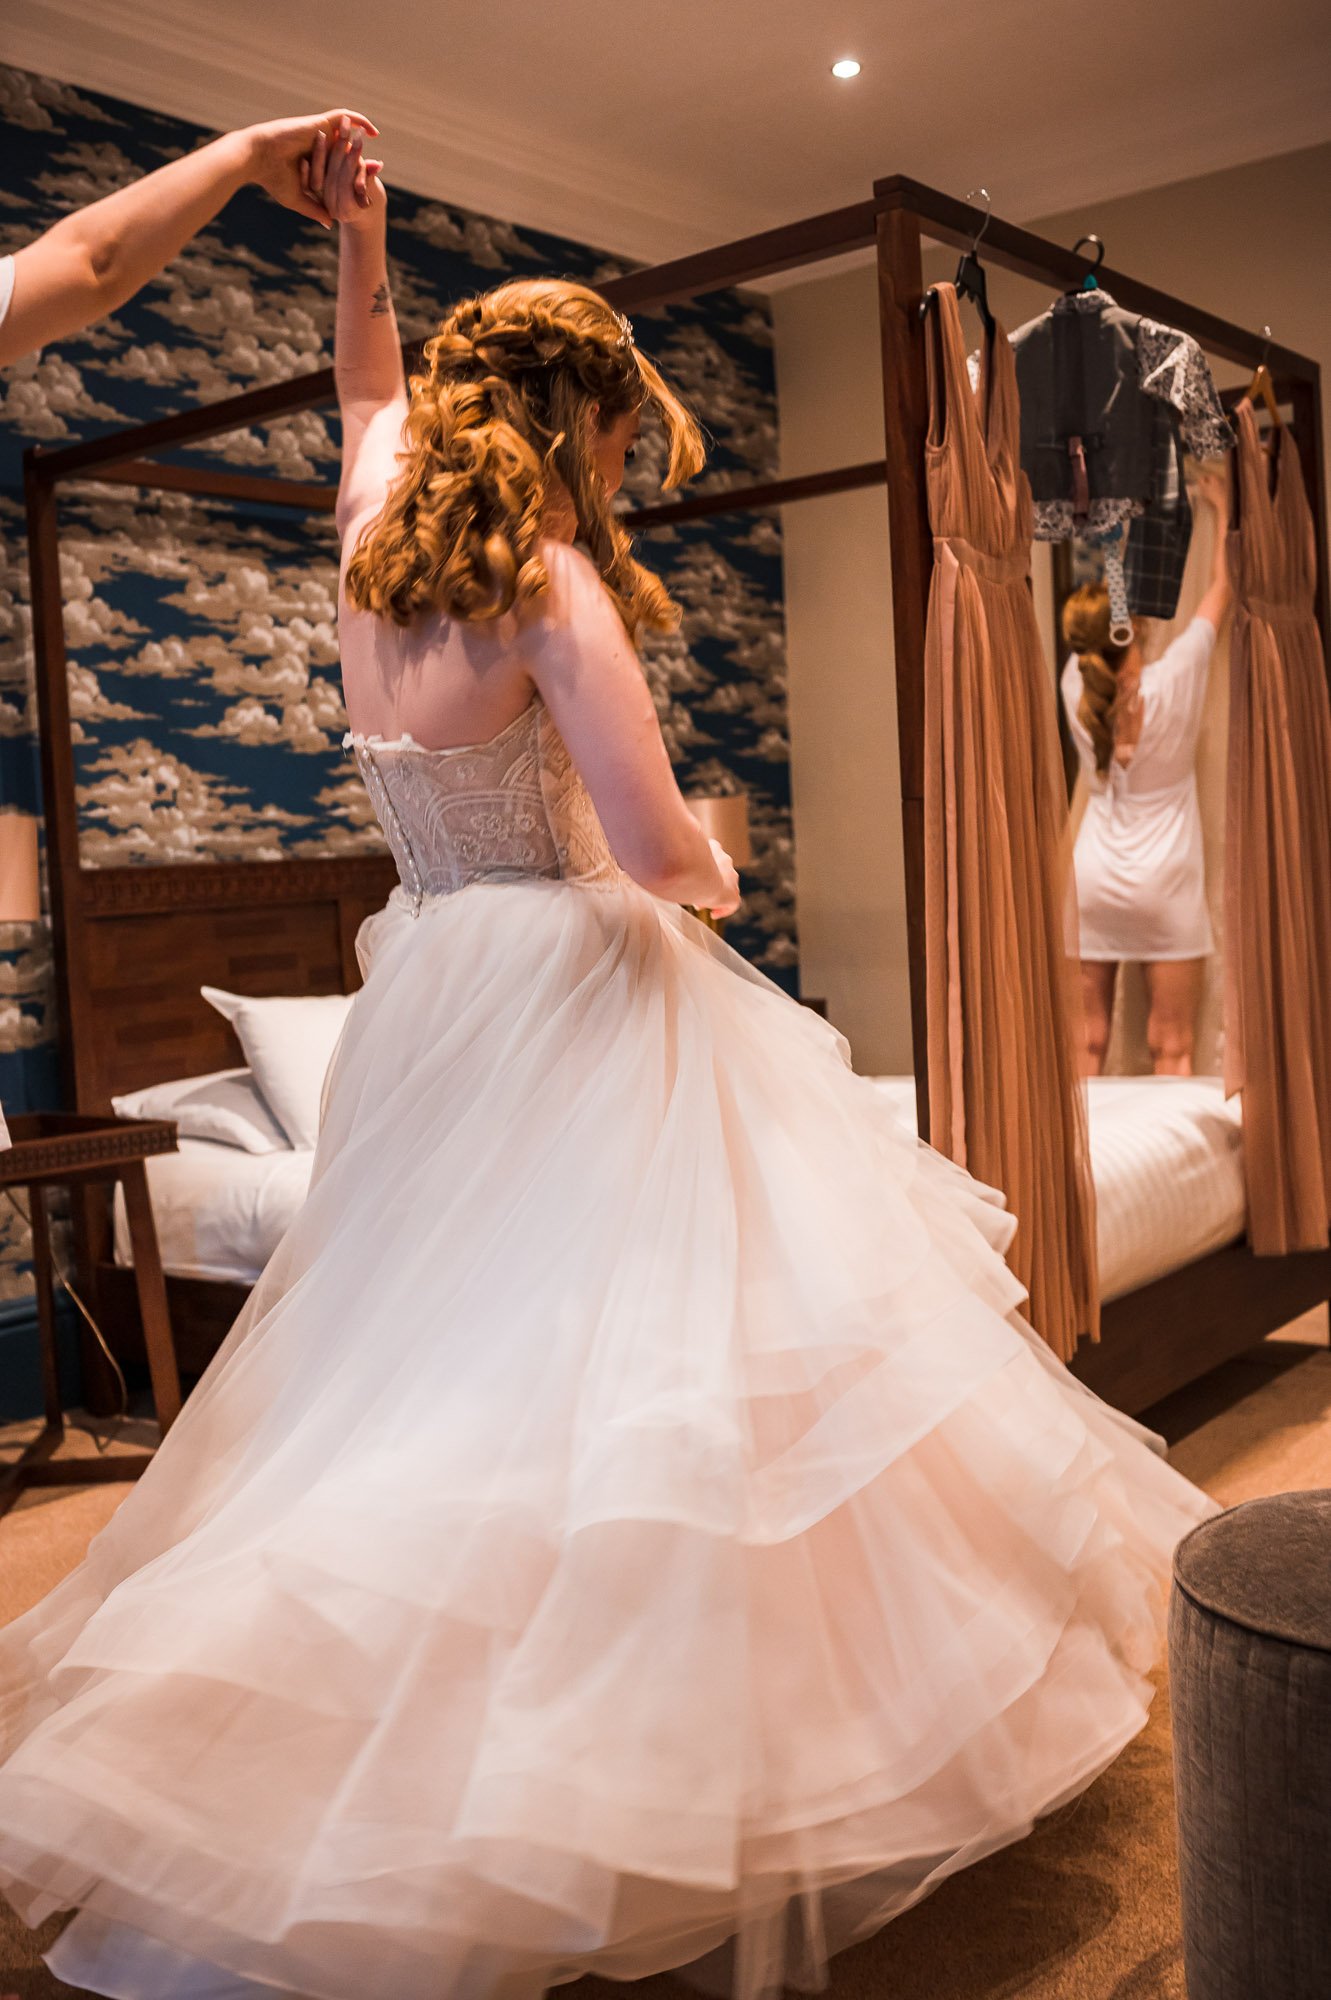 Bride doing a twirl in her wedding dress